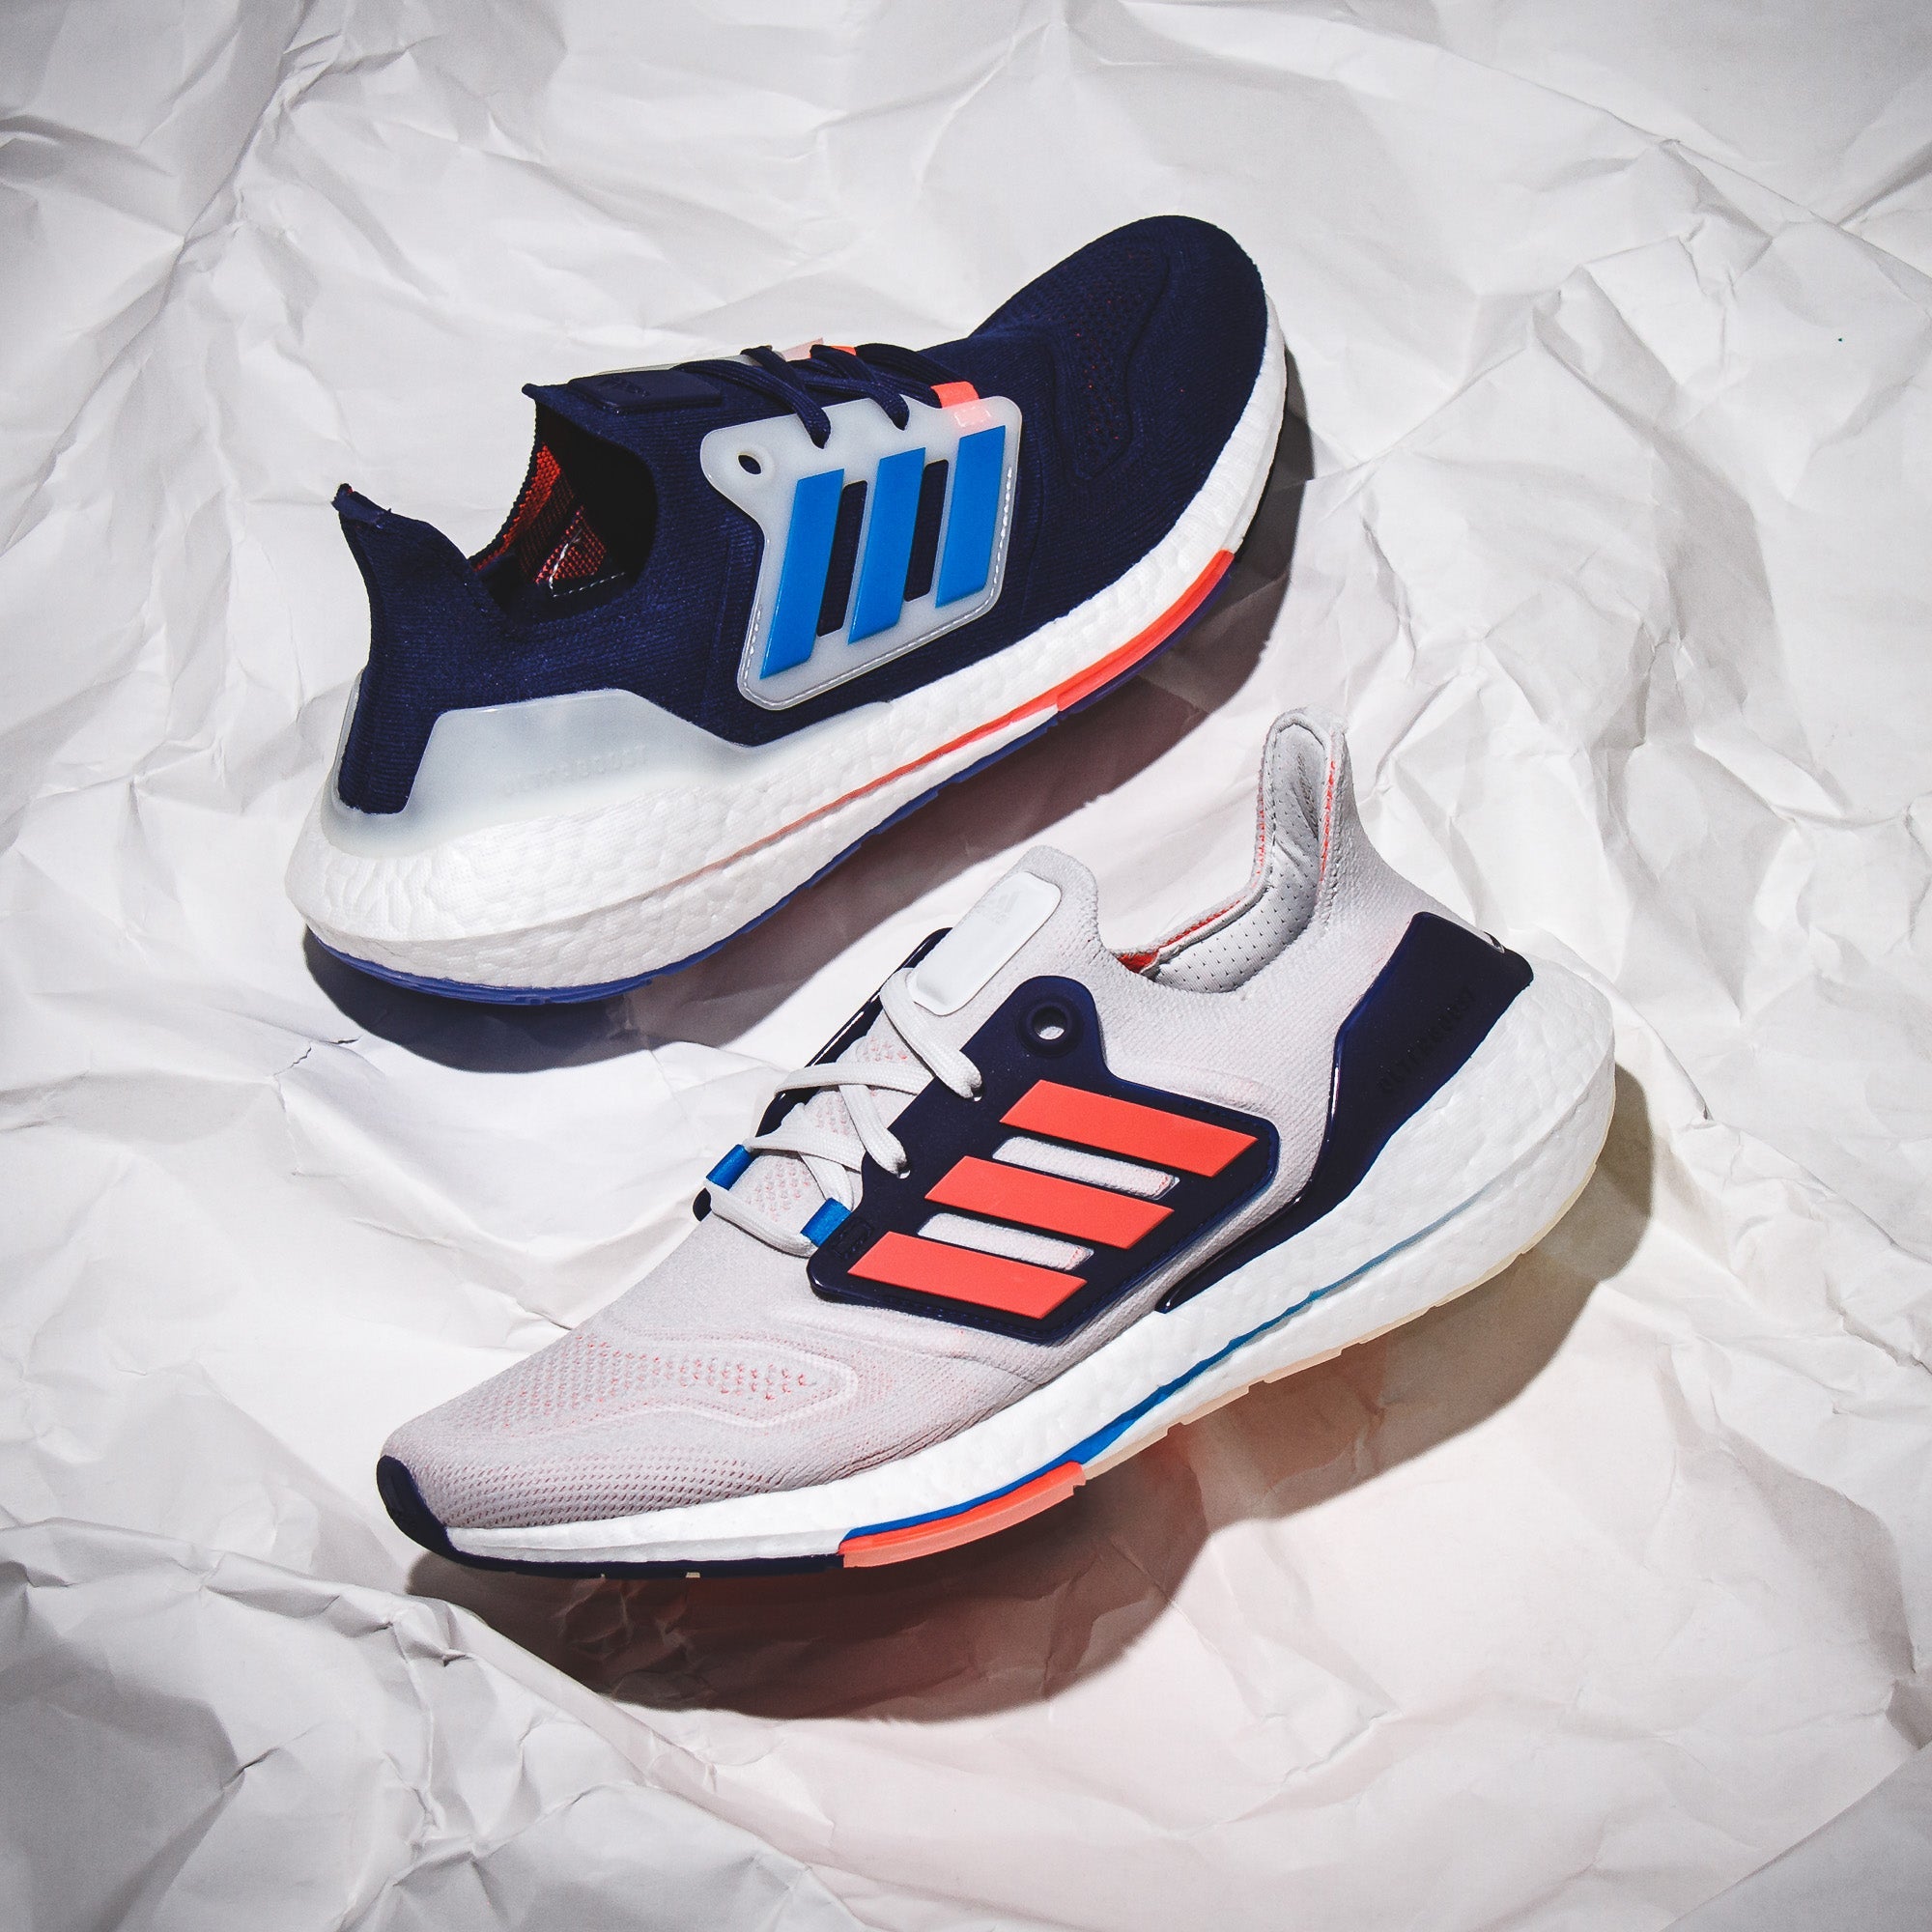 Gucci Bananya x Gucci Rhyton Marathon Running Shoes Sneakers